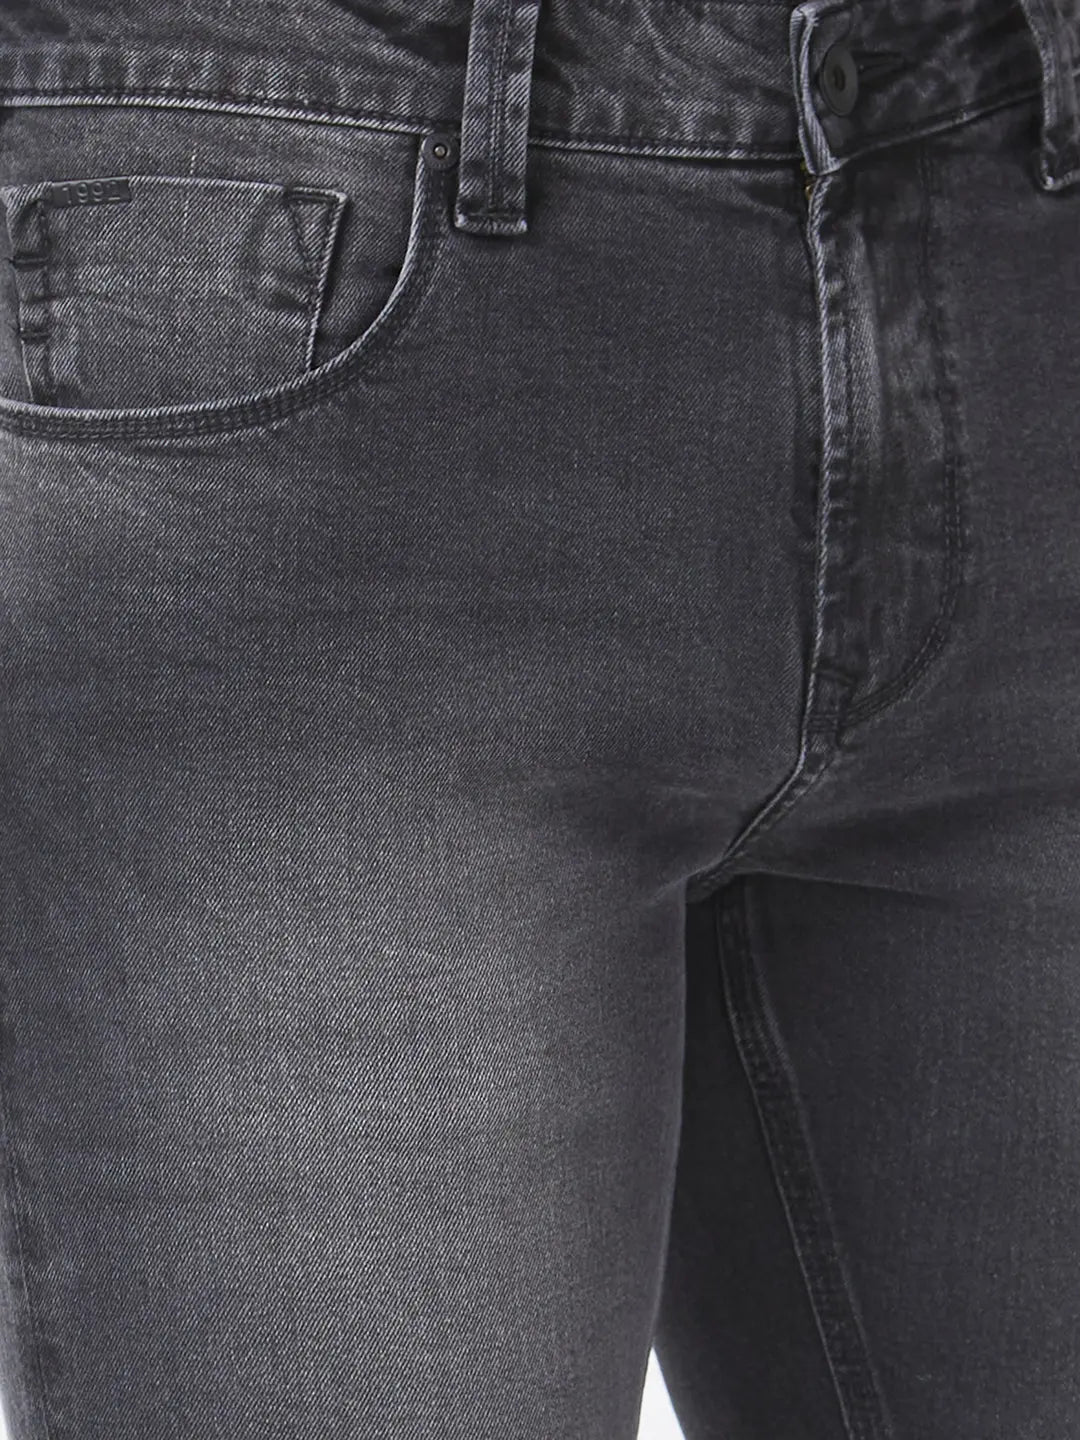 Spykar Men Carbon Black Cotton Stretch Slim Fit Narrow Length Clean Look Low Rise Jeans (Skinny)